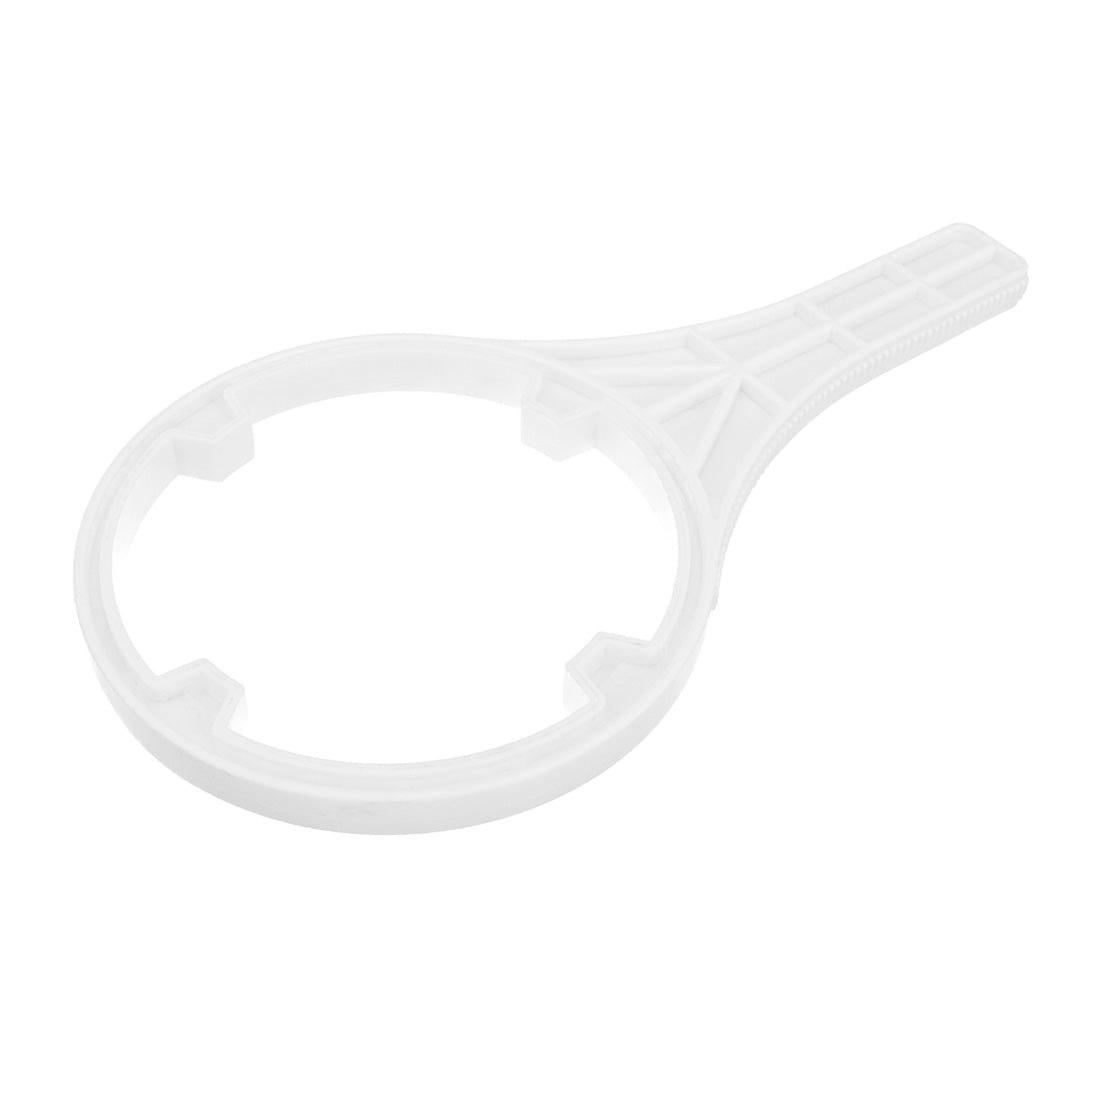 XERO Filter Wrench - Small